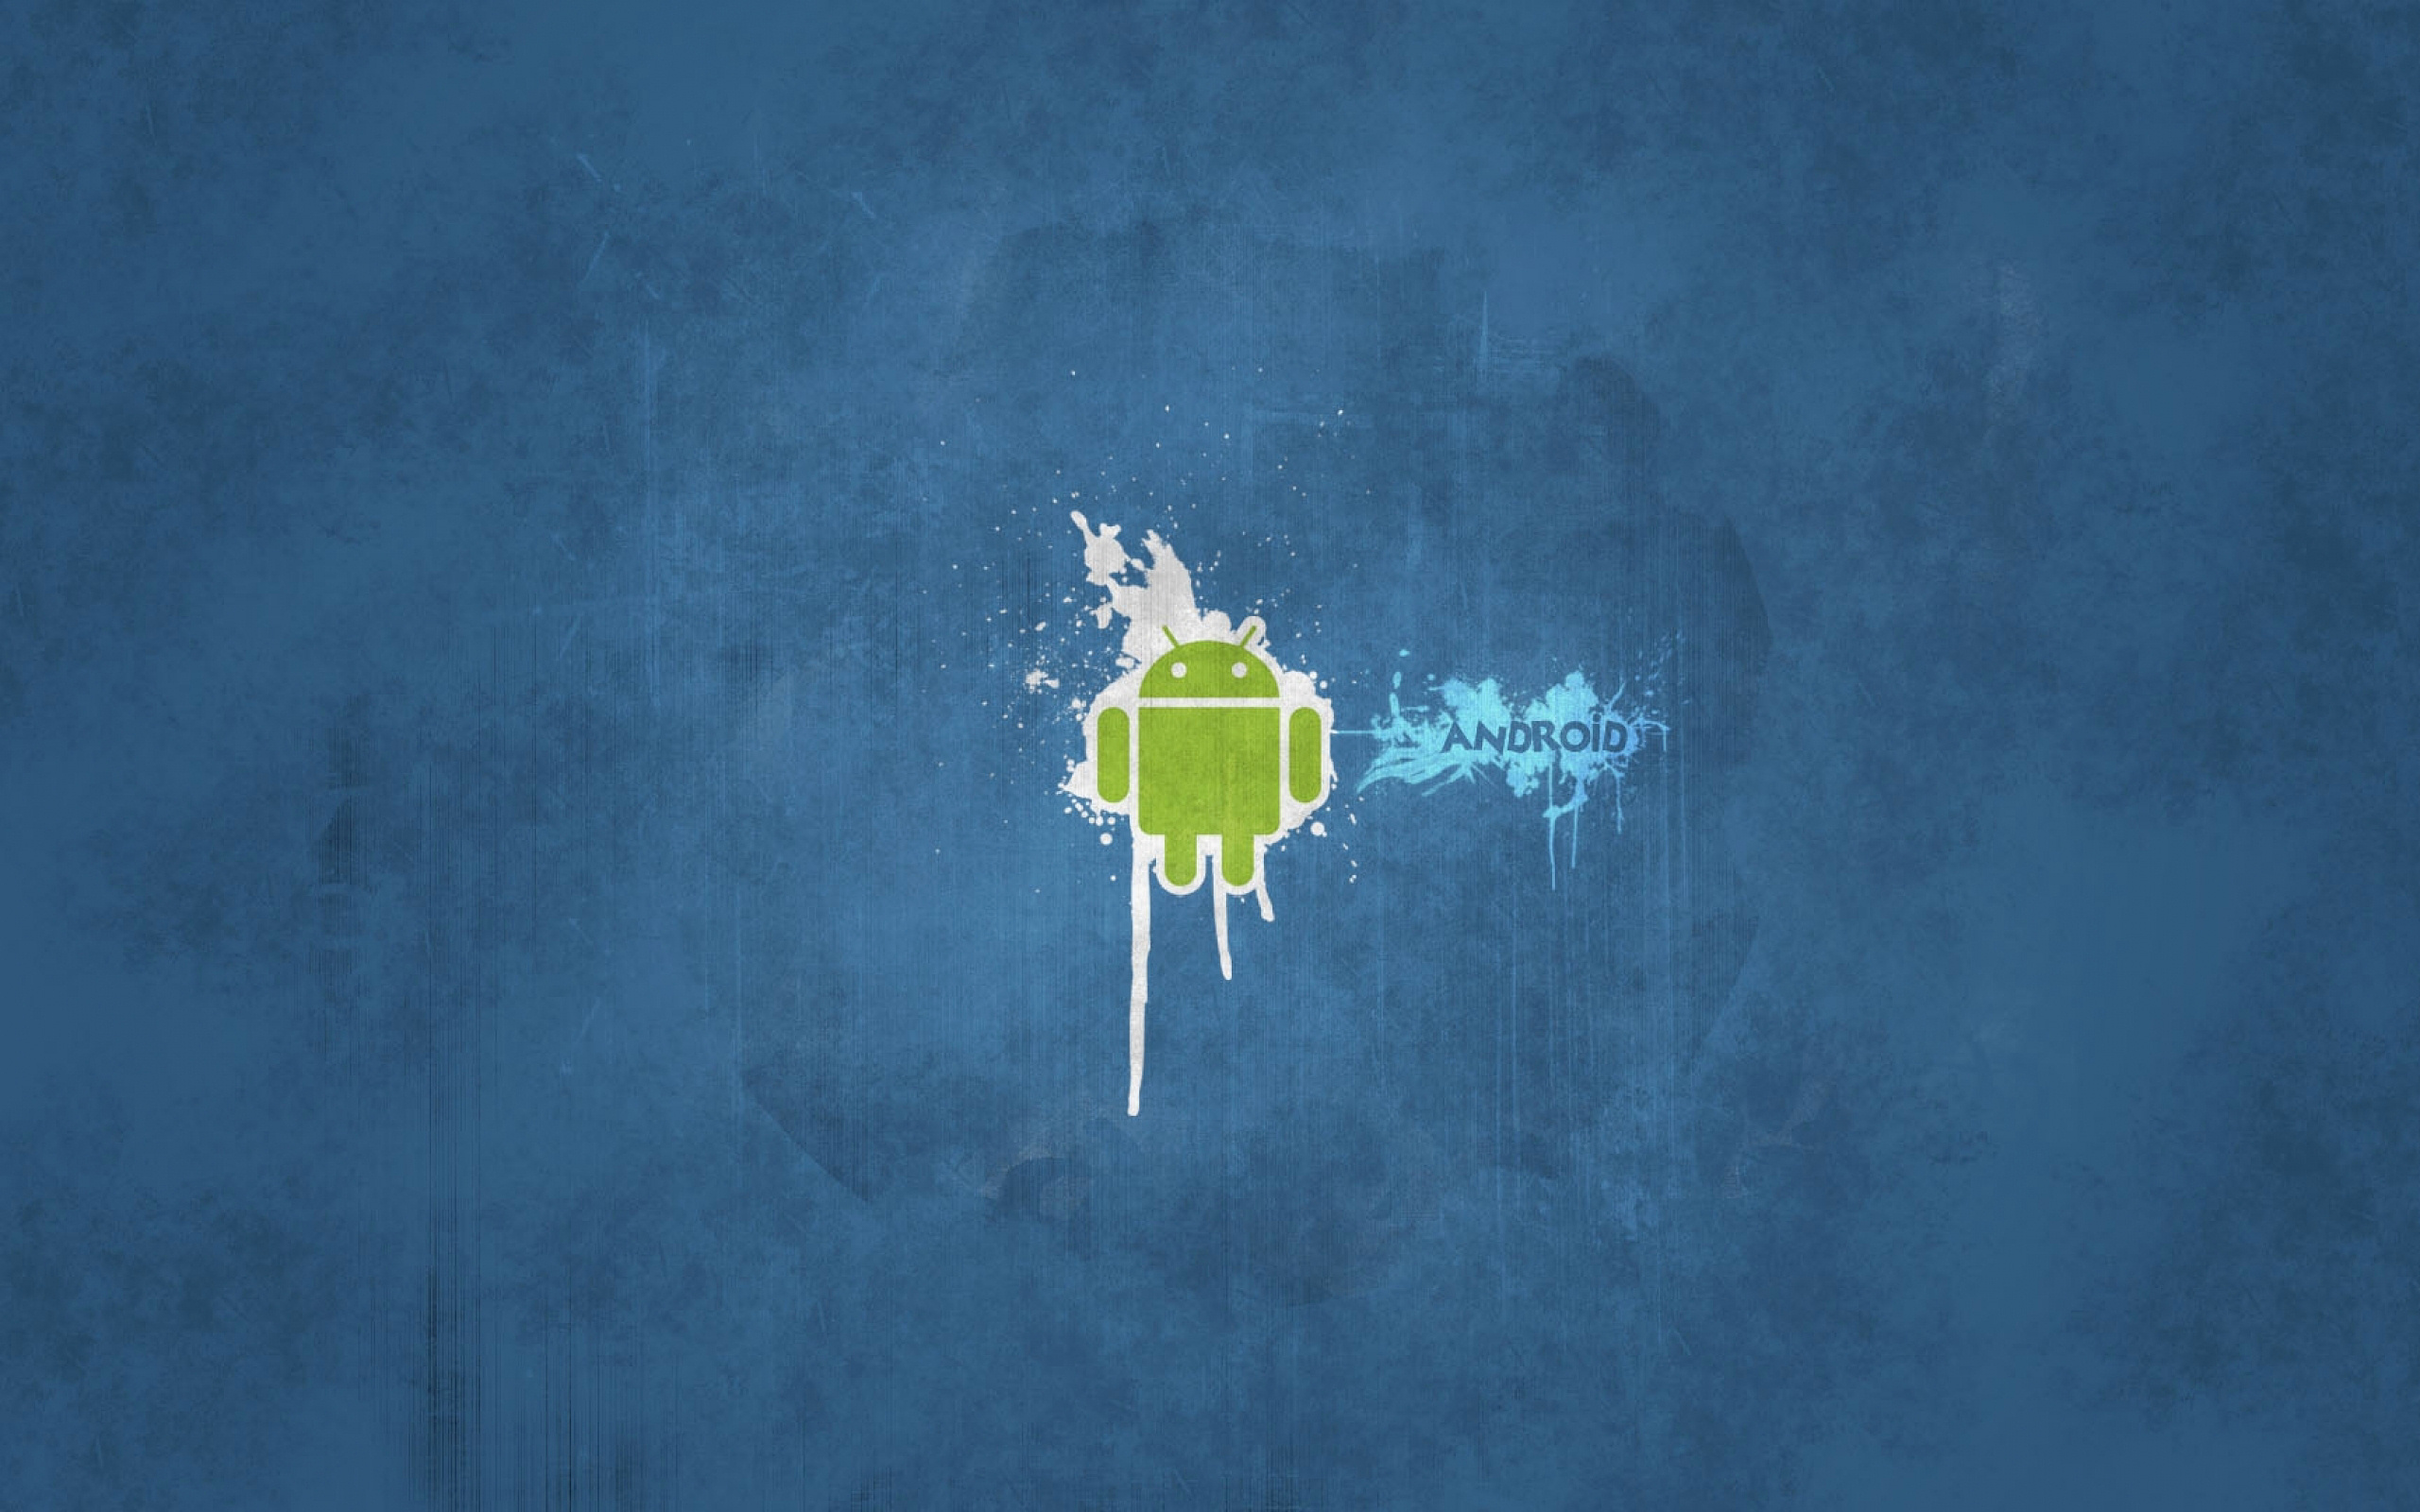 Android Logo Wallpaper High Resolution